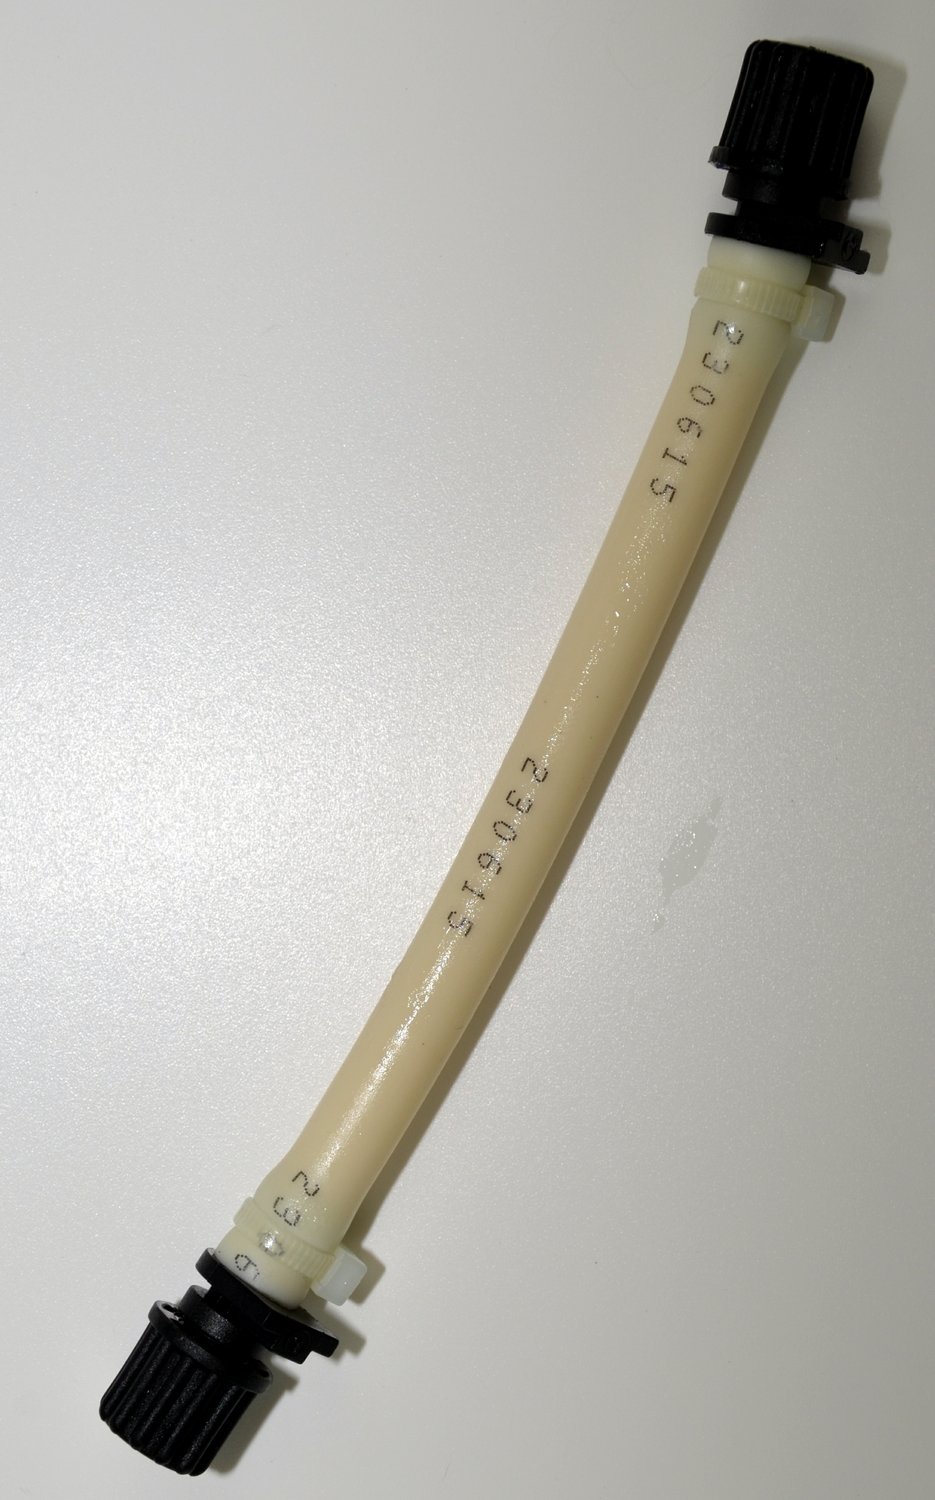 Seko replacement feed tube